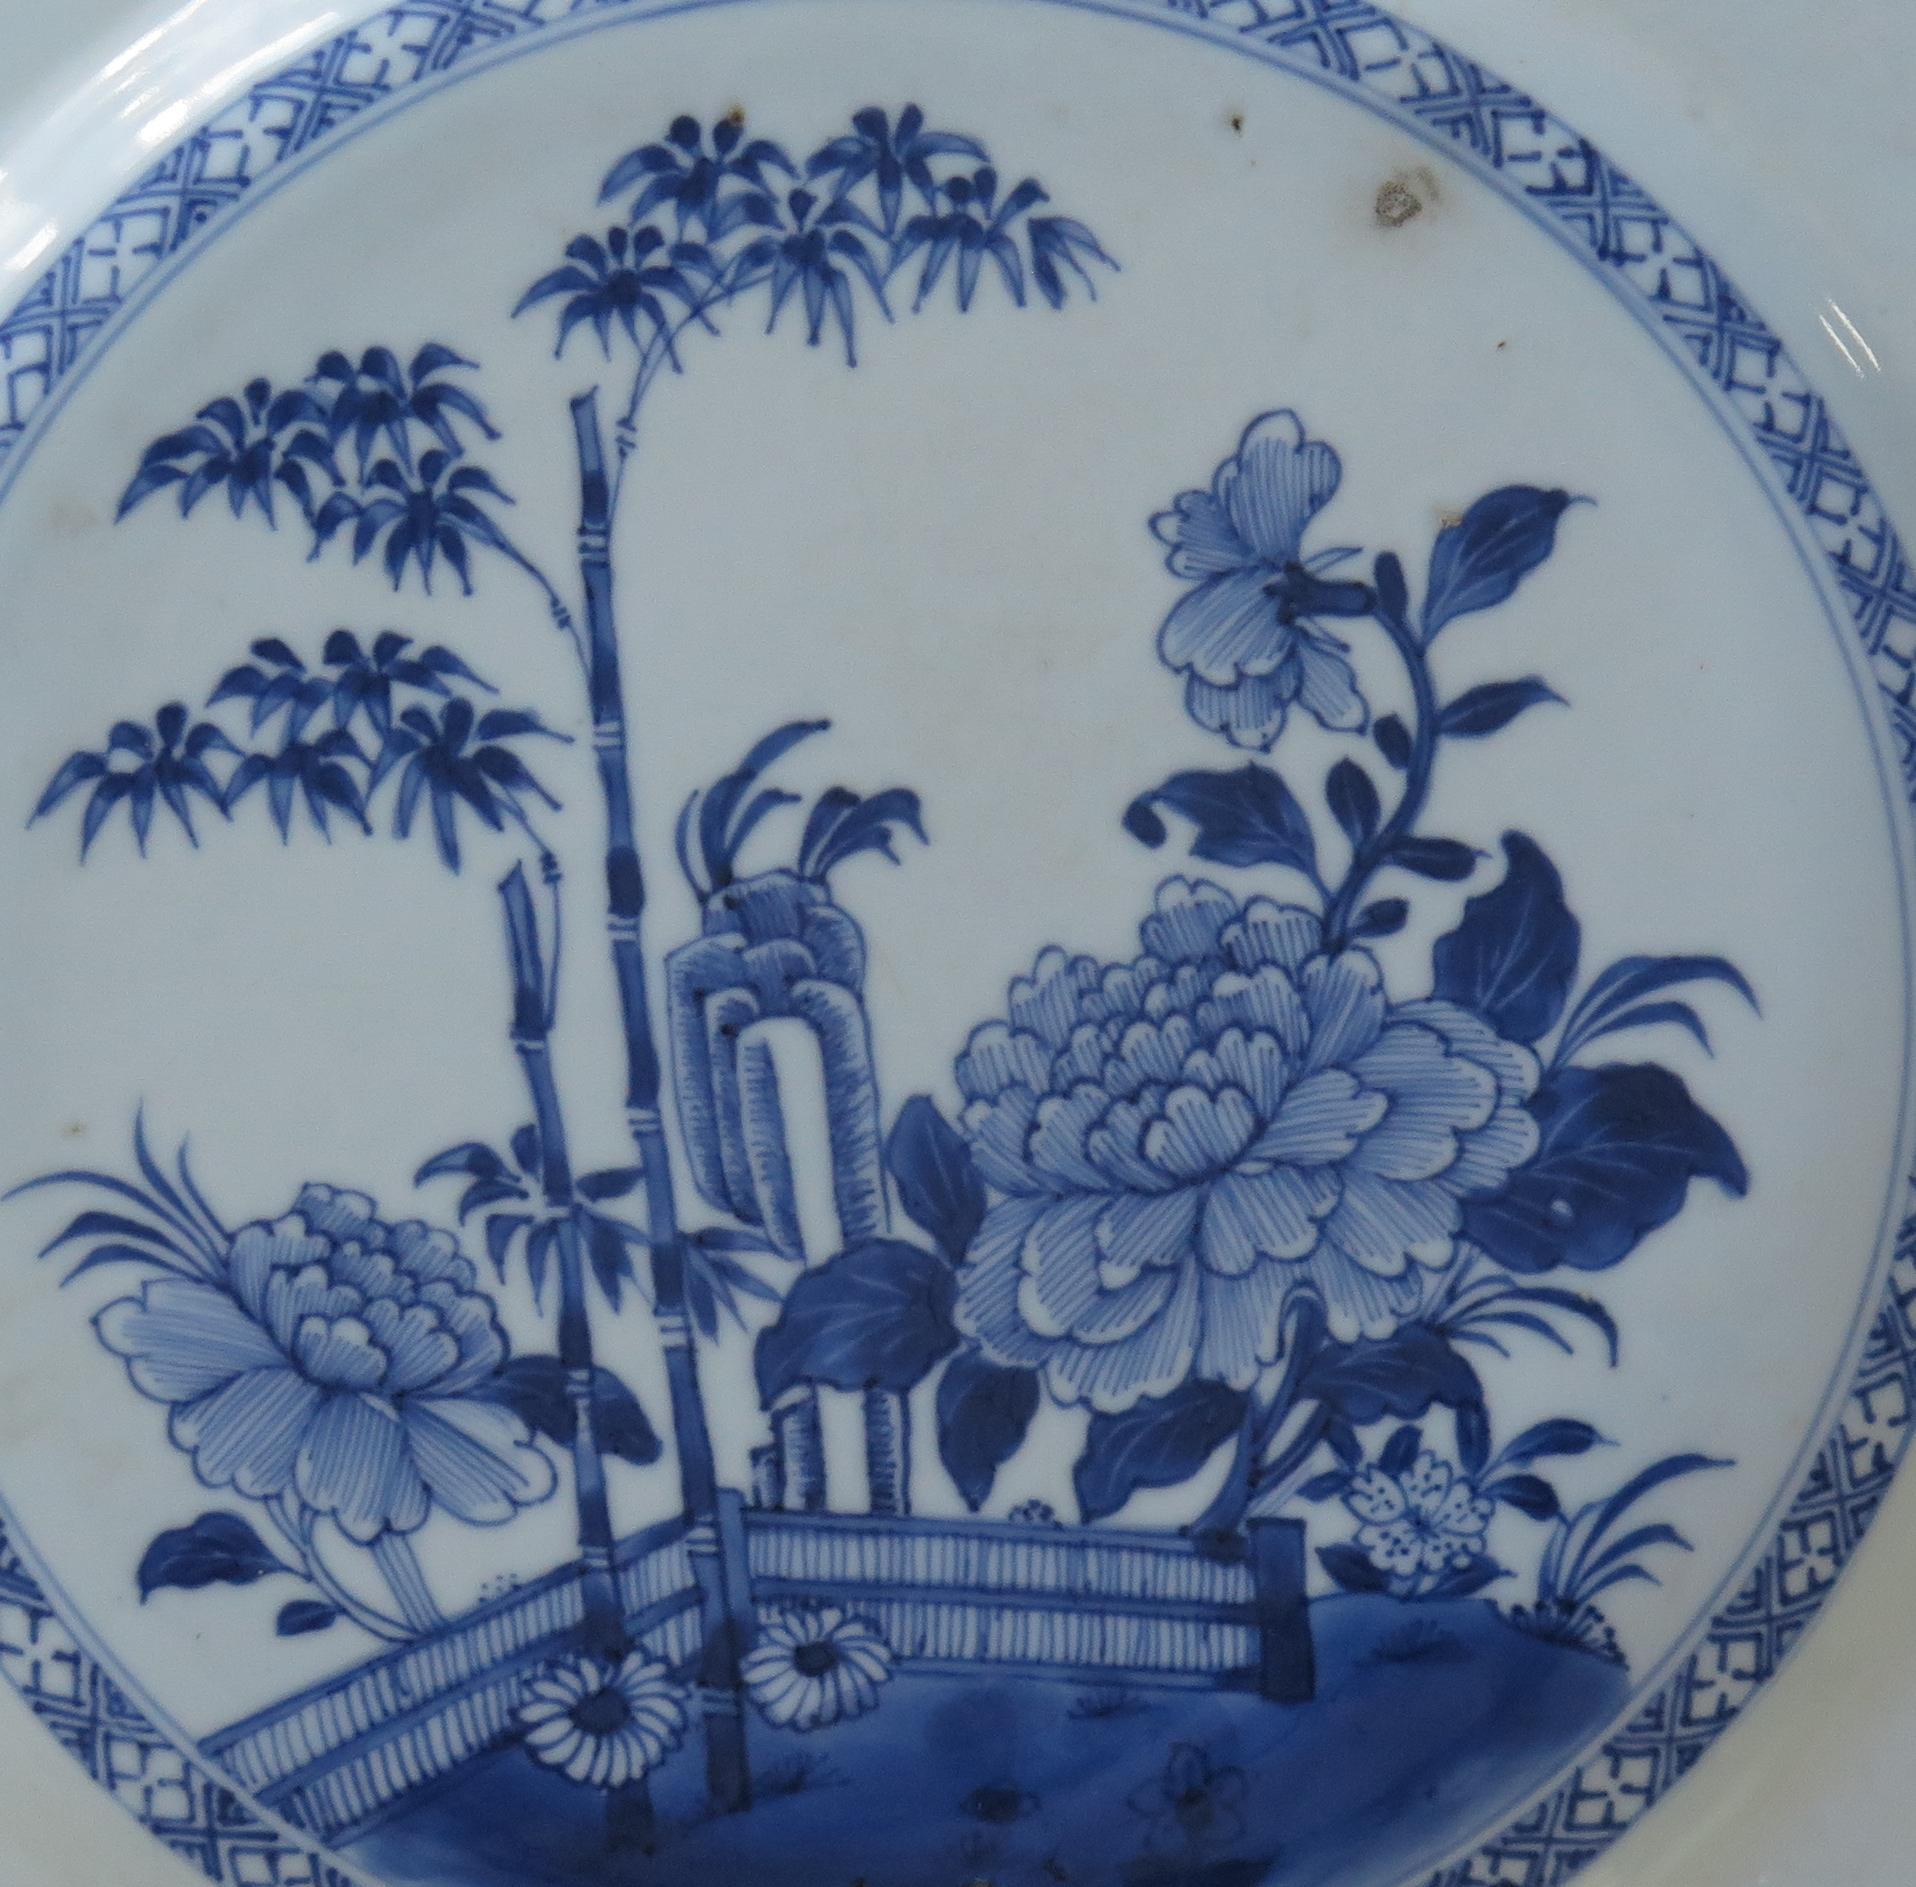 18th century plates